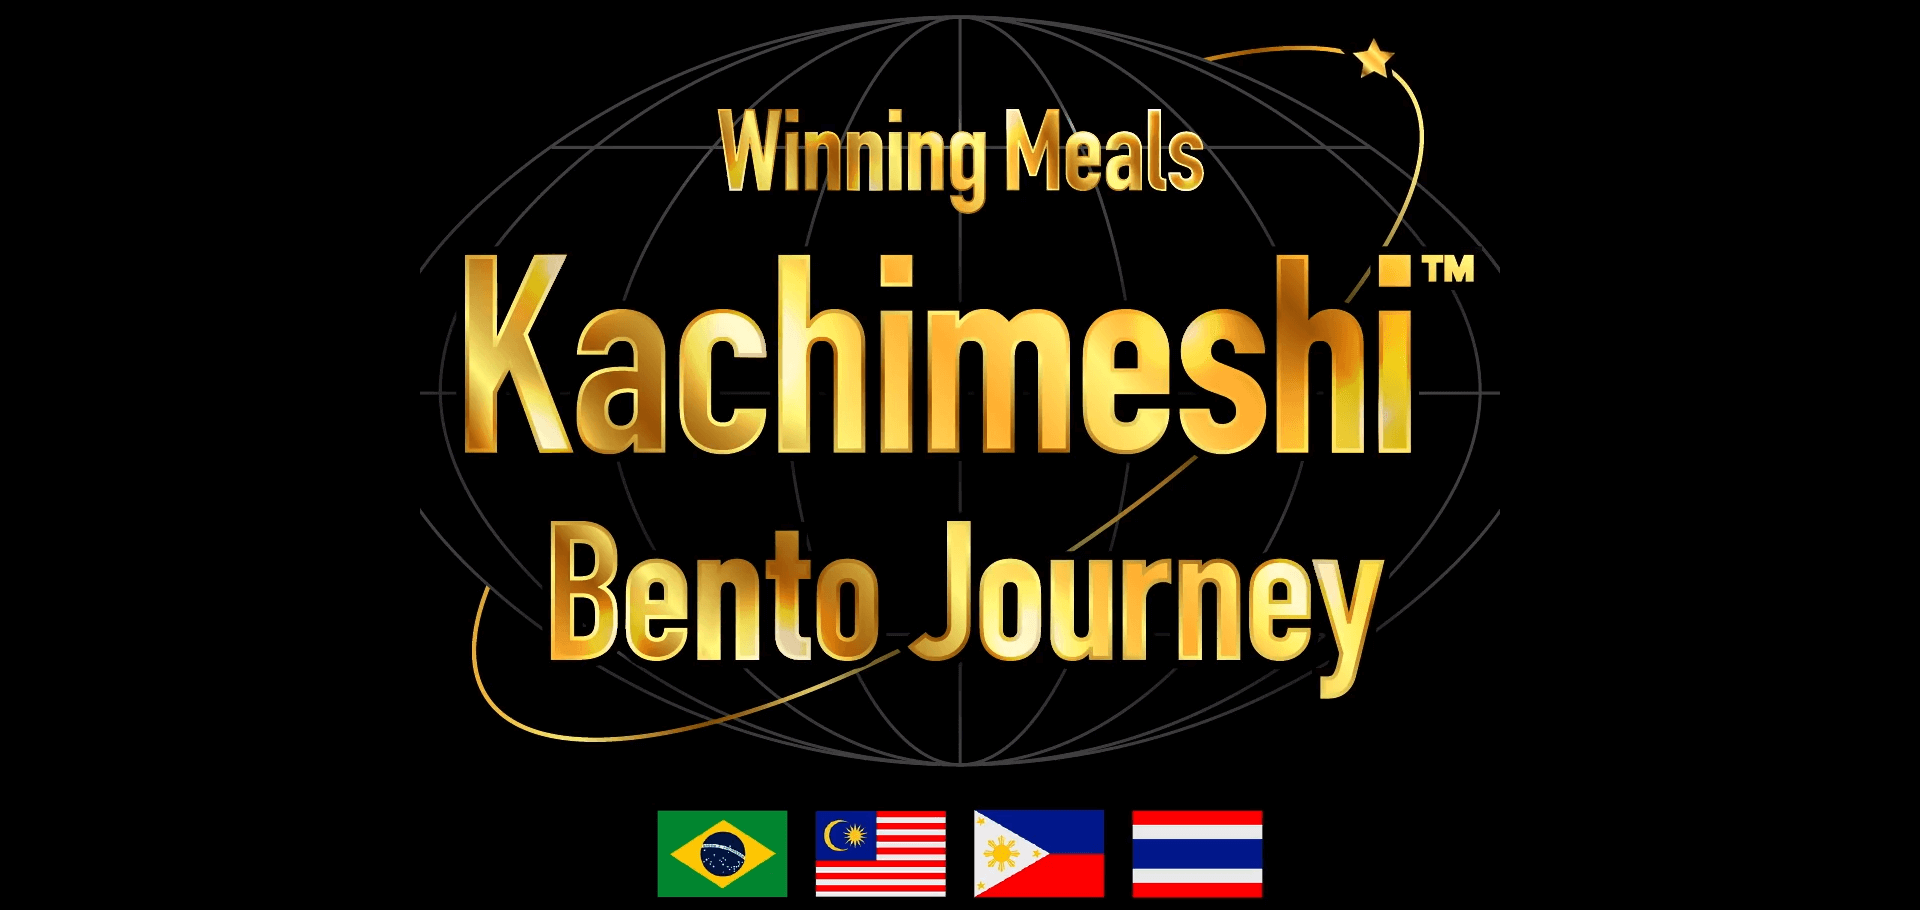 Winning Meals Kachimeshi Bento Journey